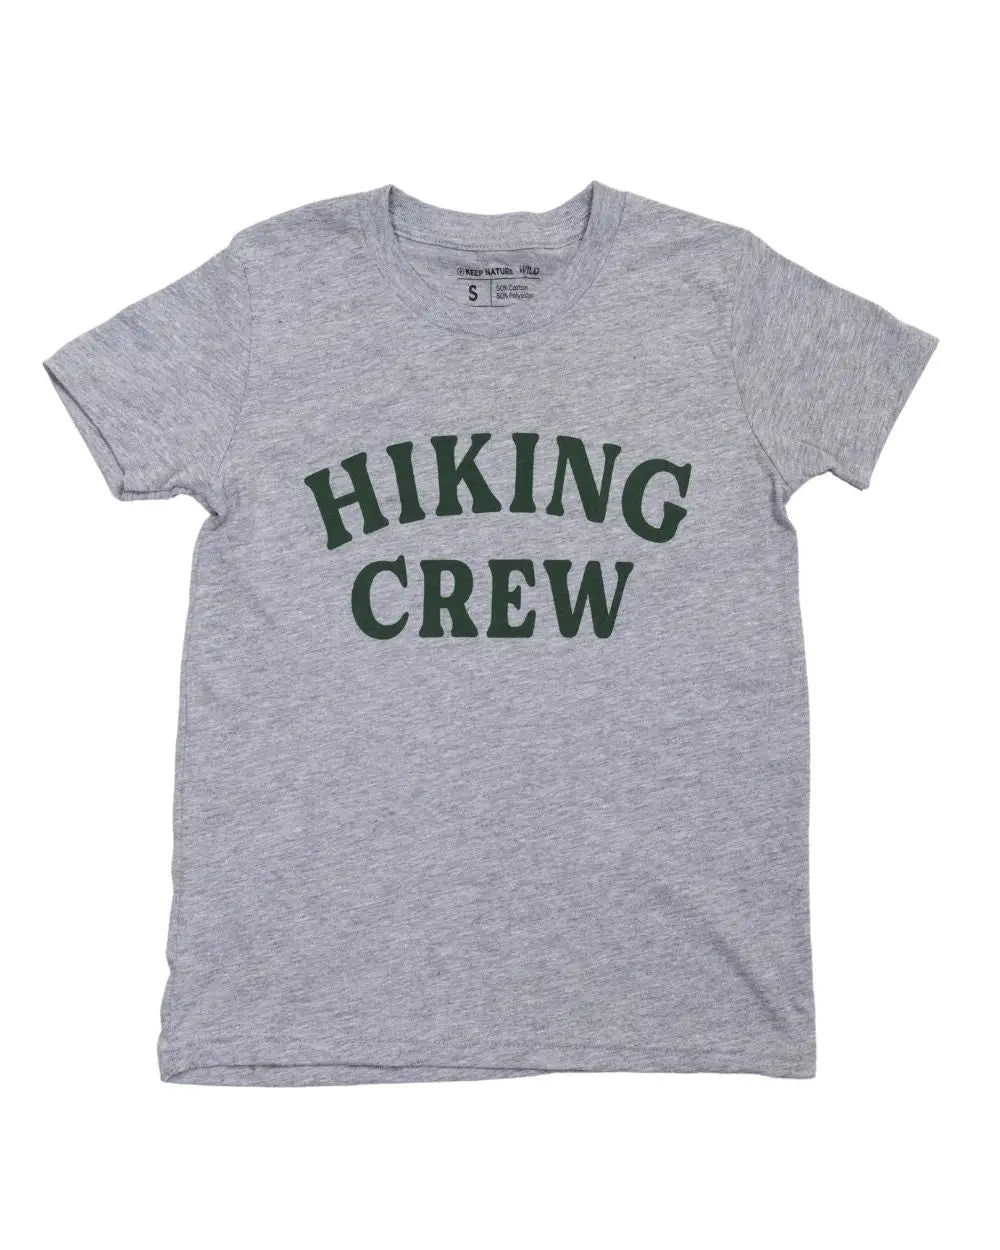 Hiking Crew - Youth Tee